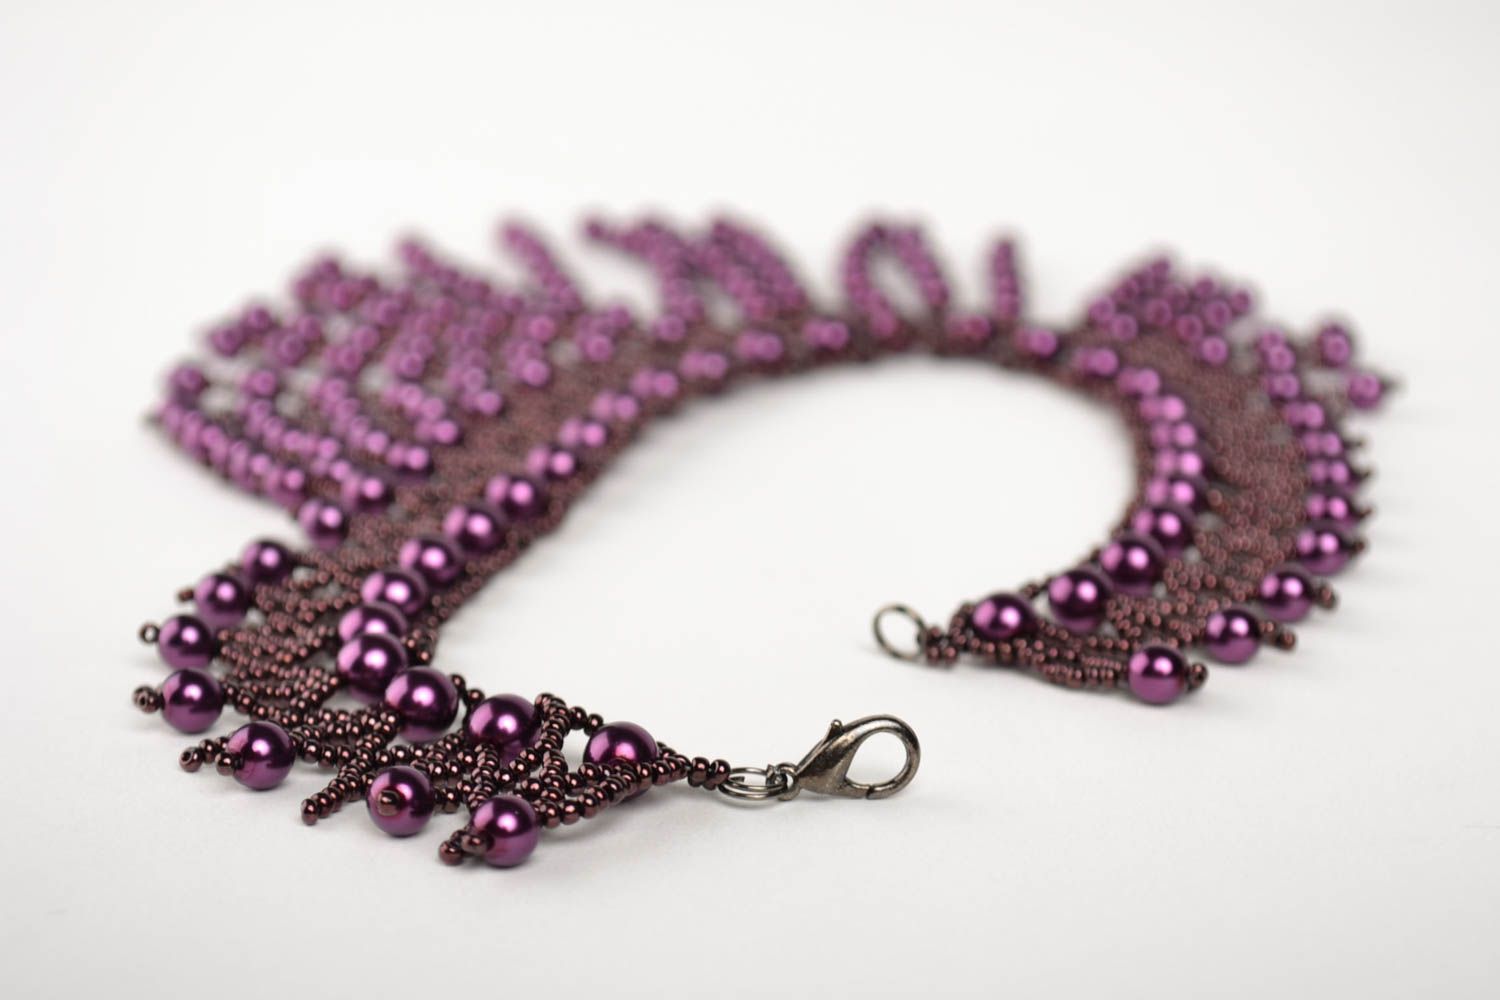 Handmade beaded necklace seed beads jewelry evening necklace handmade accessory photo 4